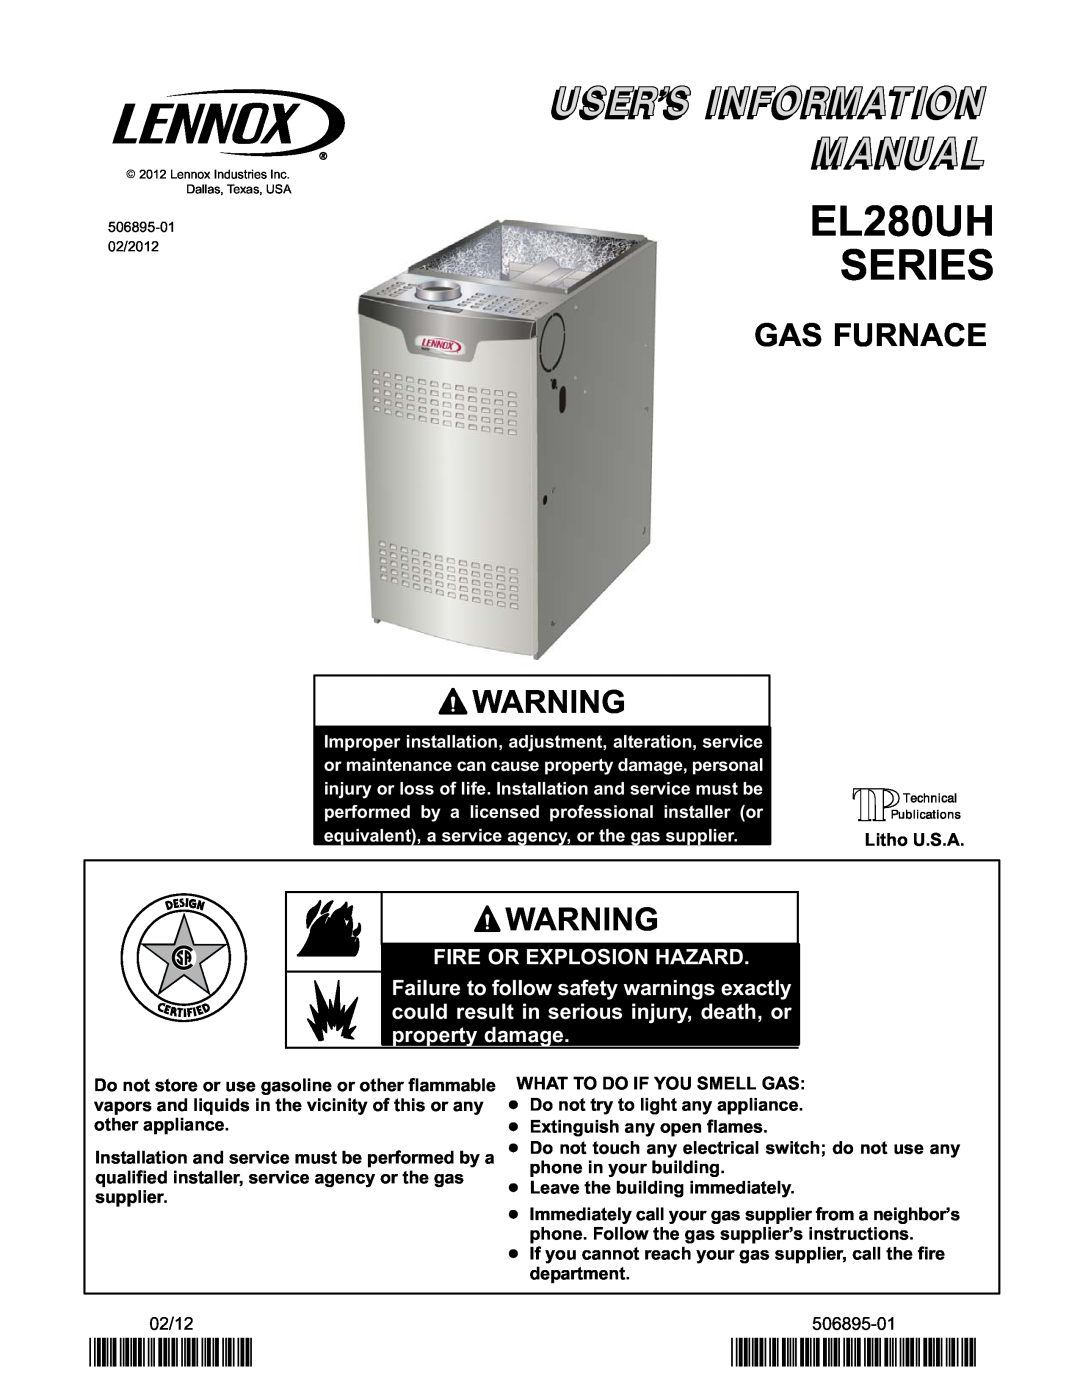 Lennox International Inc manual Gas Furnace, EL280UH SERIES, 2P0112, P506895-01, Fire Or Explosion Hazard 